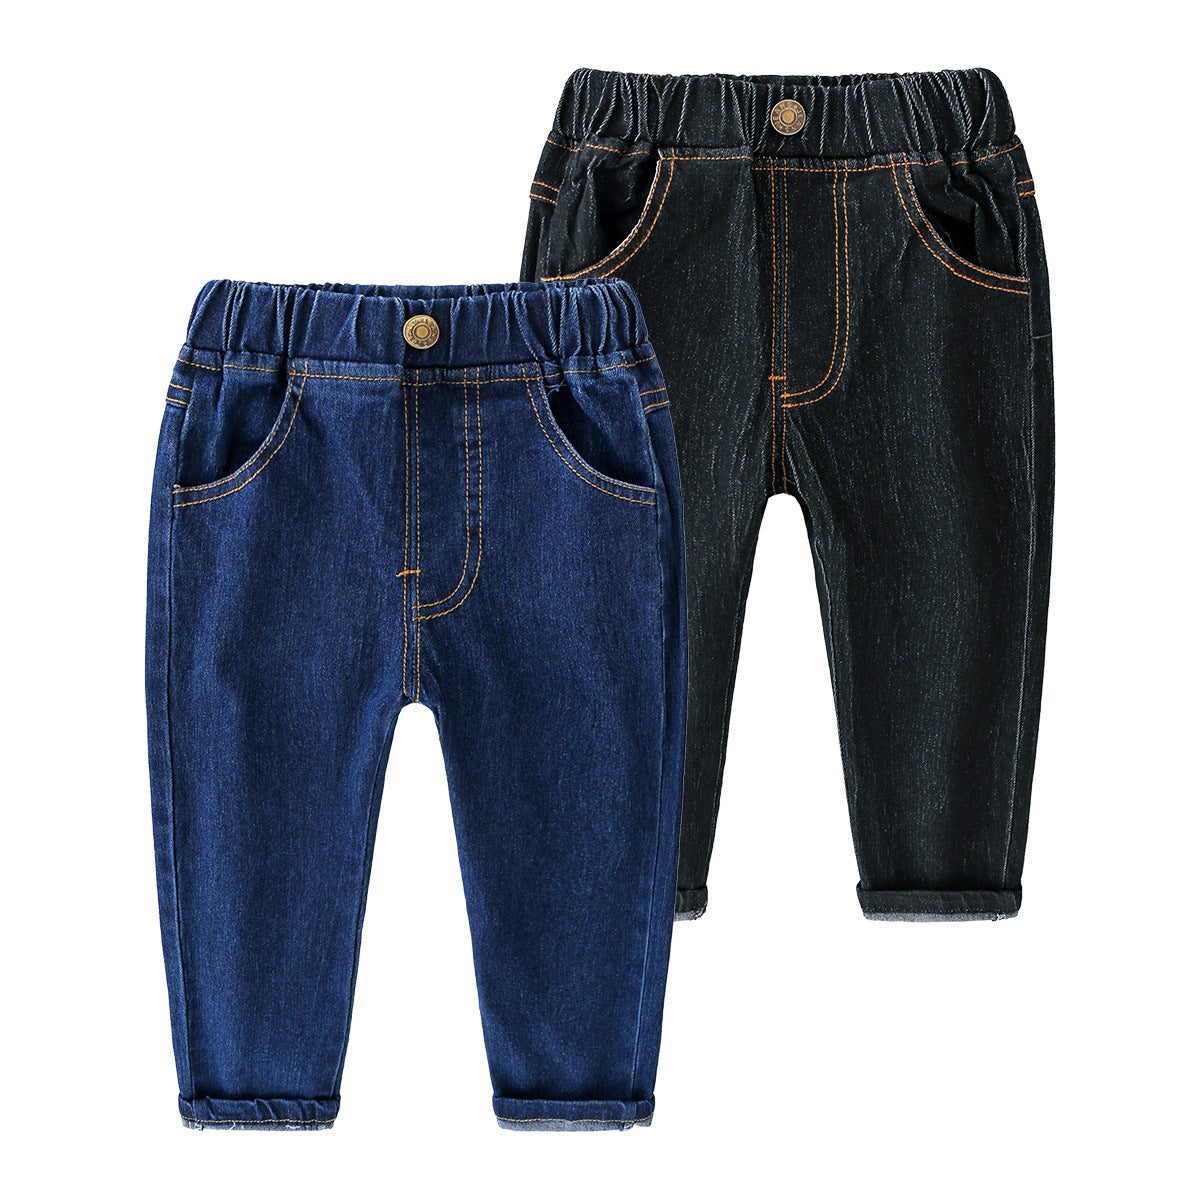 [513619] - Bawahan Celana Panjang Jeans Import Anak Cowok - Motif Casual Line